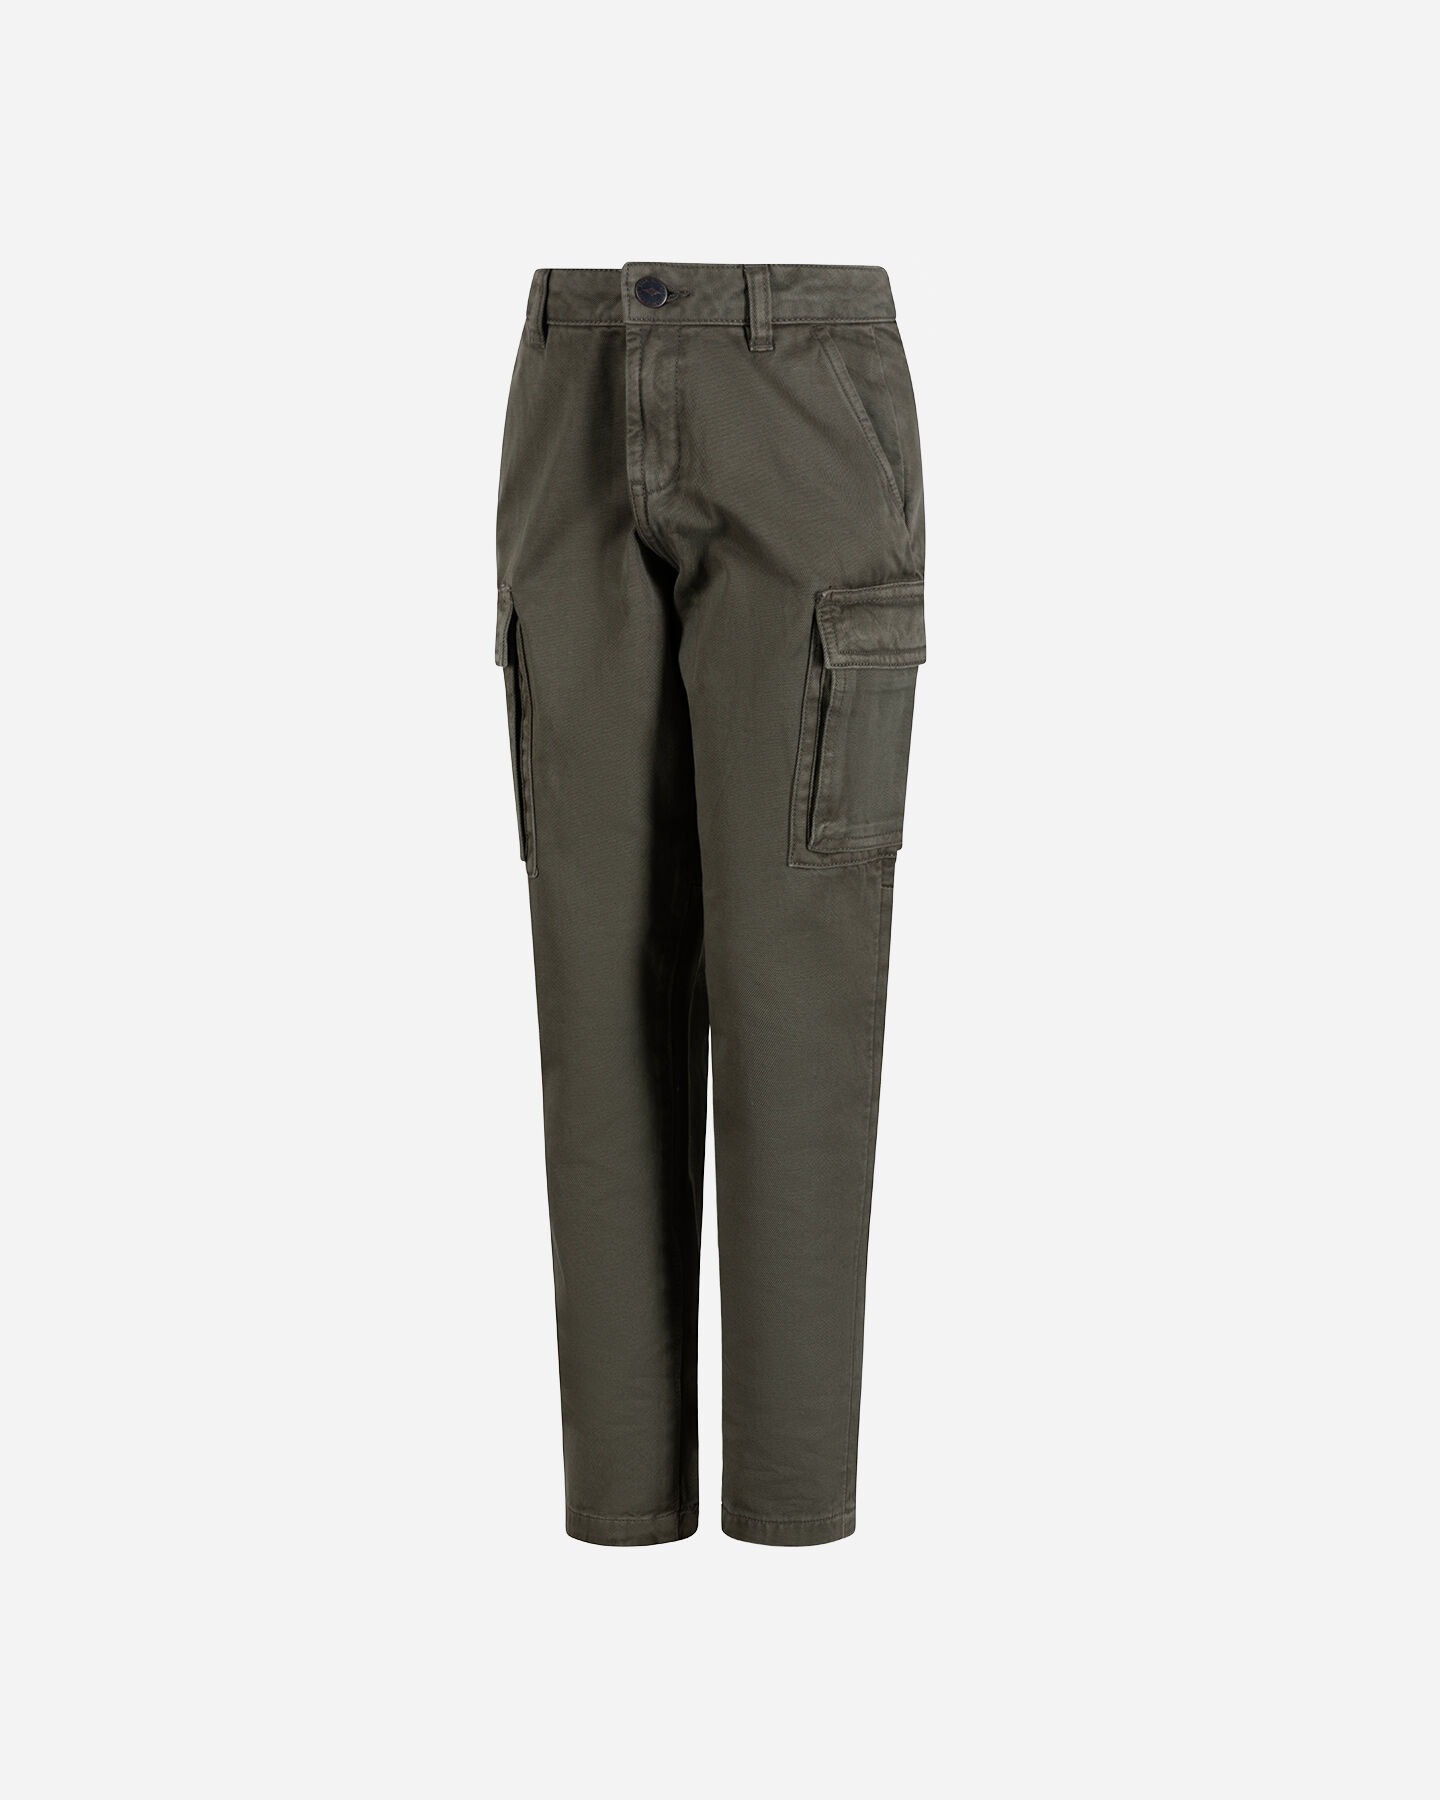  Pantalone BEAR STREETWEAR URBAN STYLE JR S4126602|842|10 scatto 0